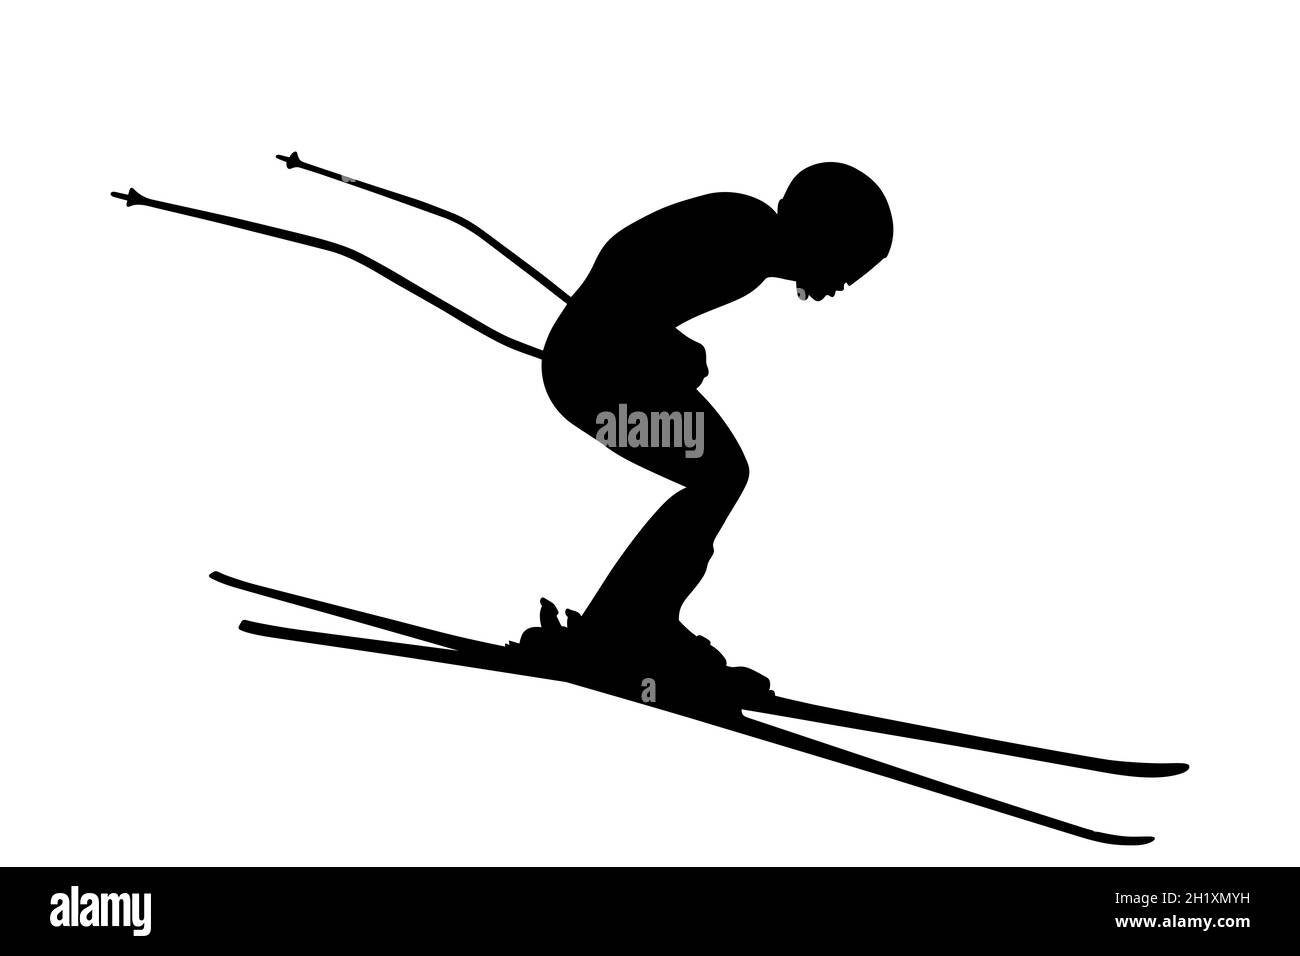 athlete skier alpine skiing downhill black silhouette Stock Photo